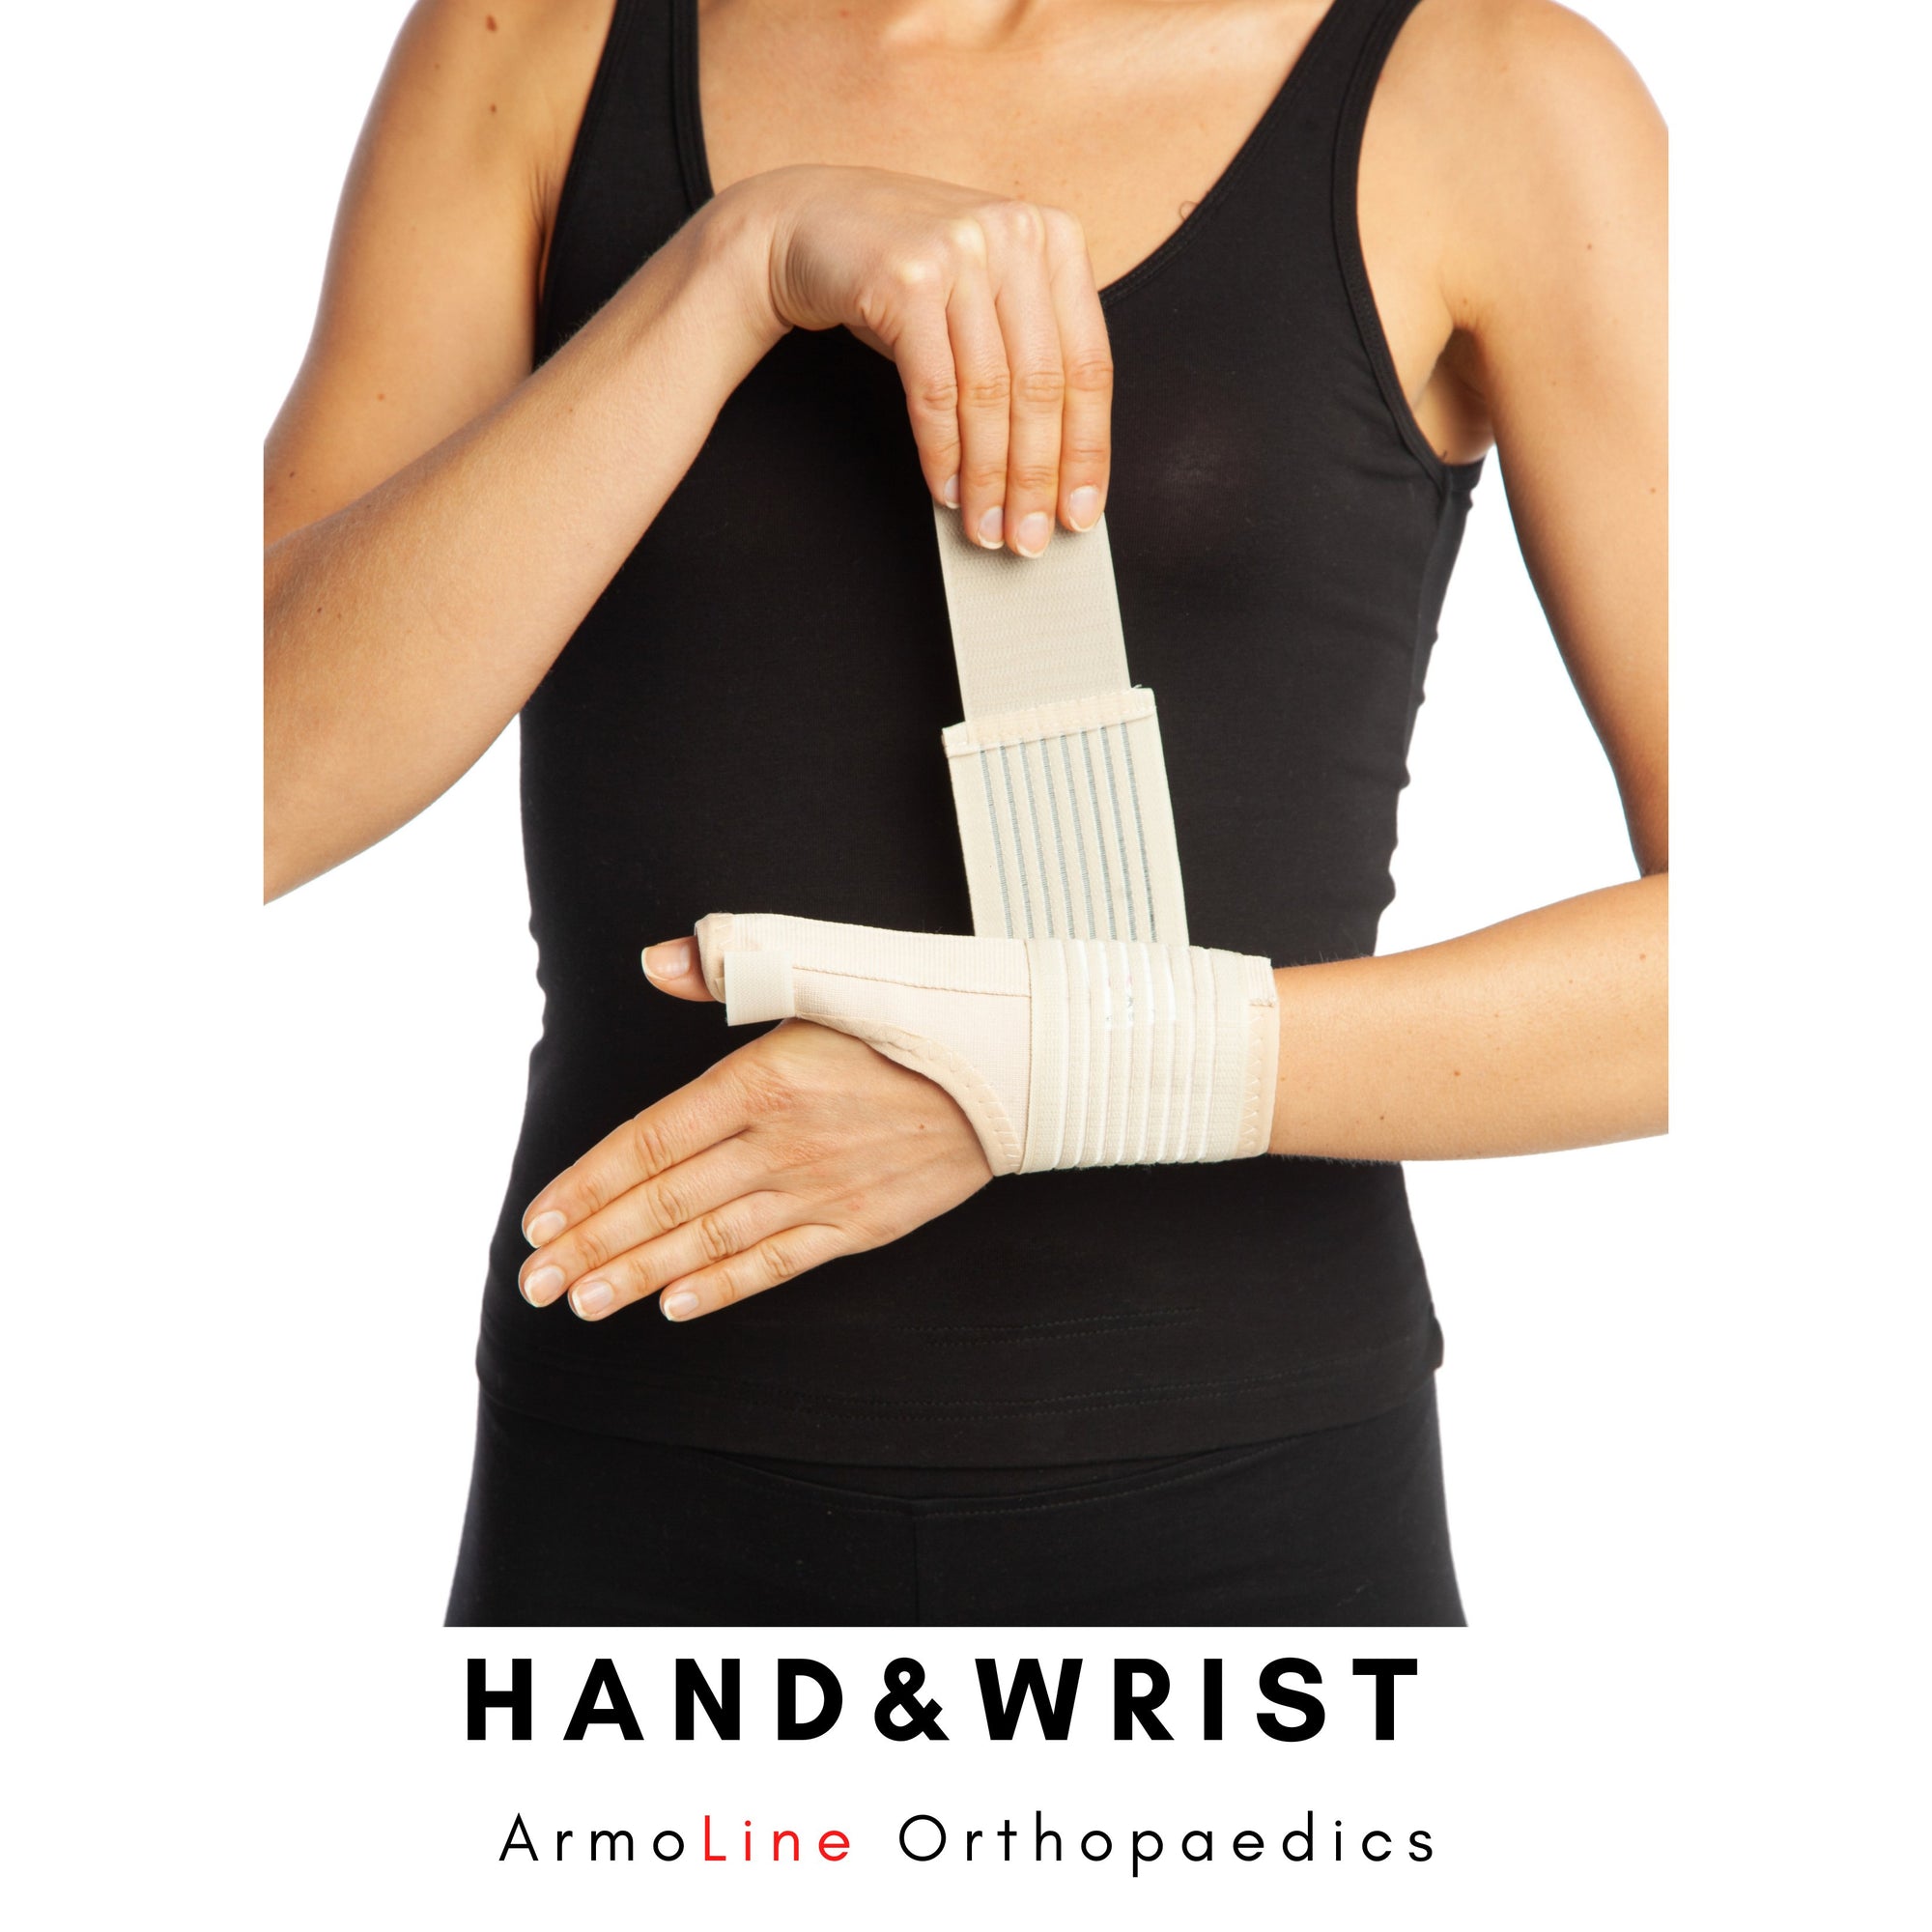 Hand, Wrist & Fingers